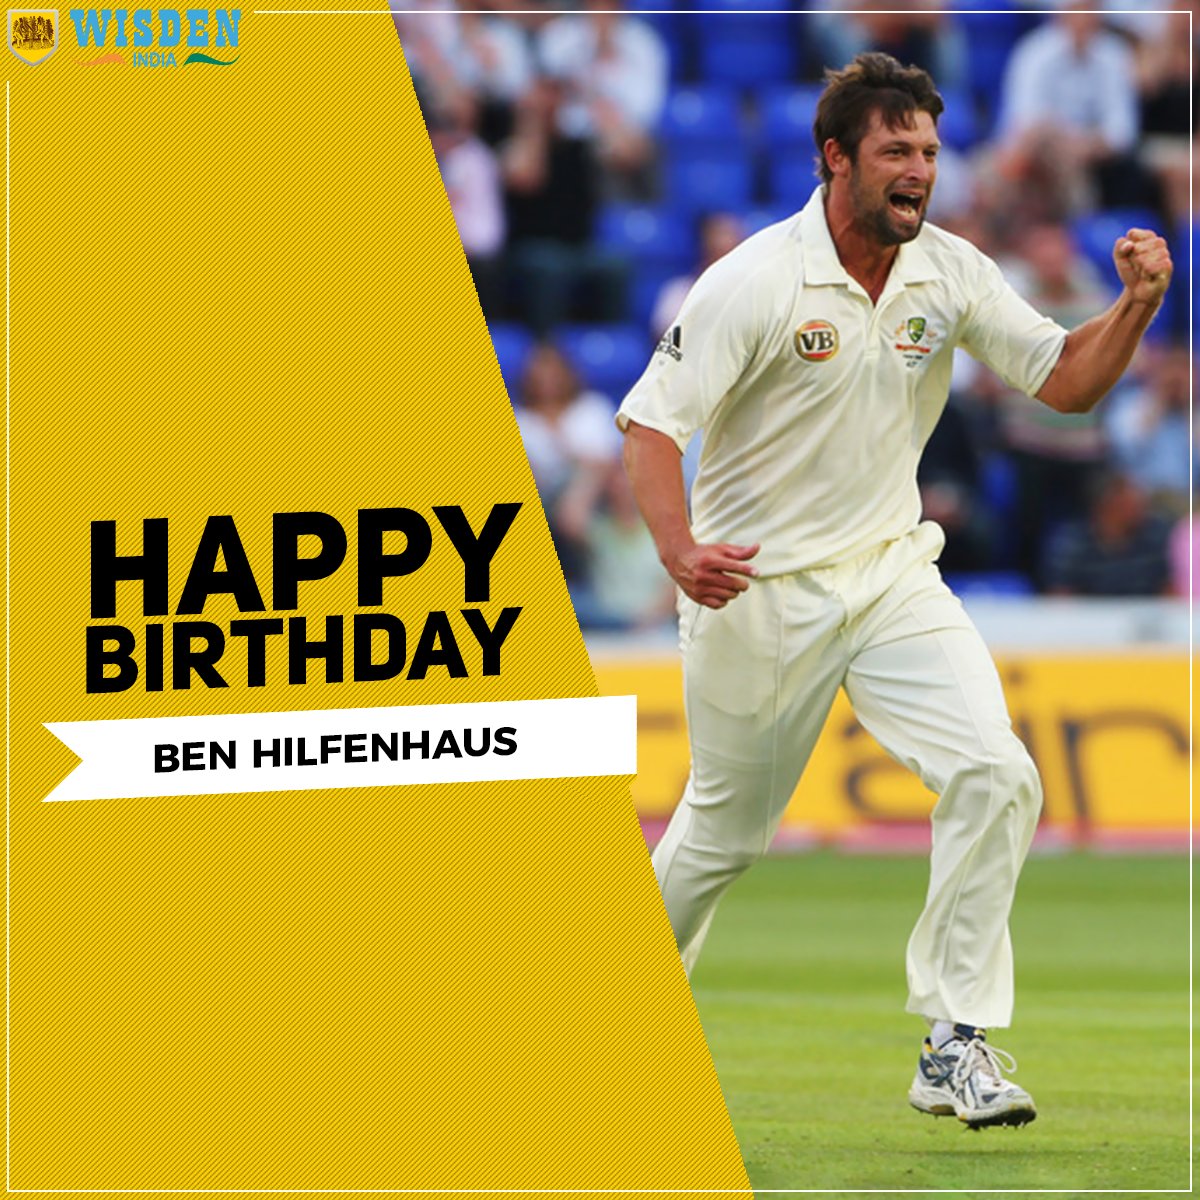 Wishing a happy Birthday to former Australian bowler Ben Hilfenhaus! 